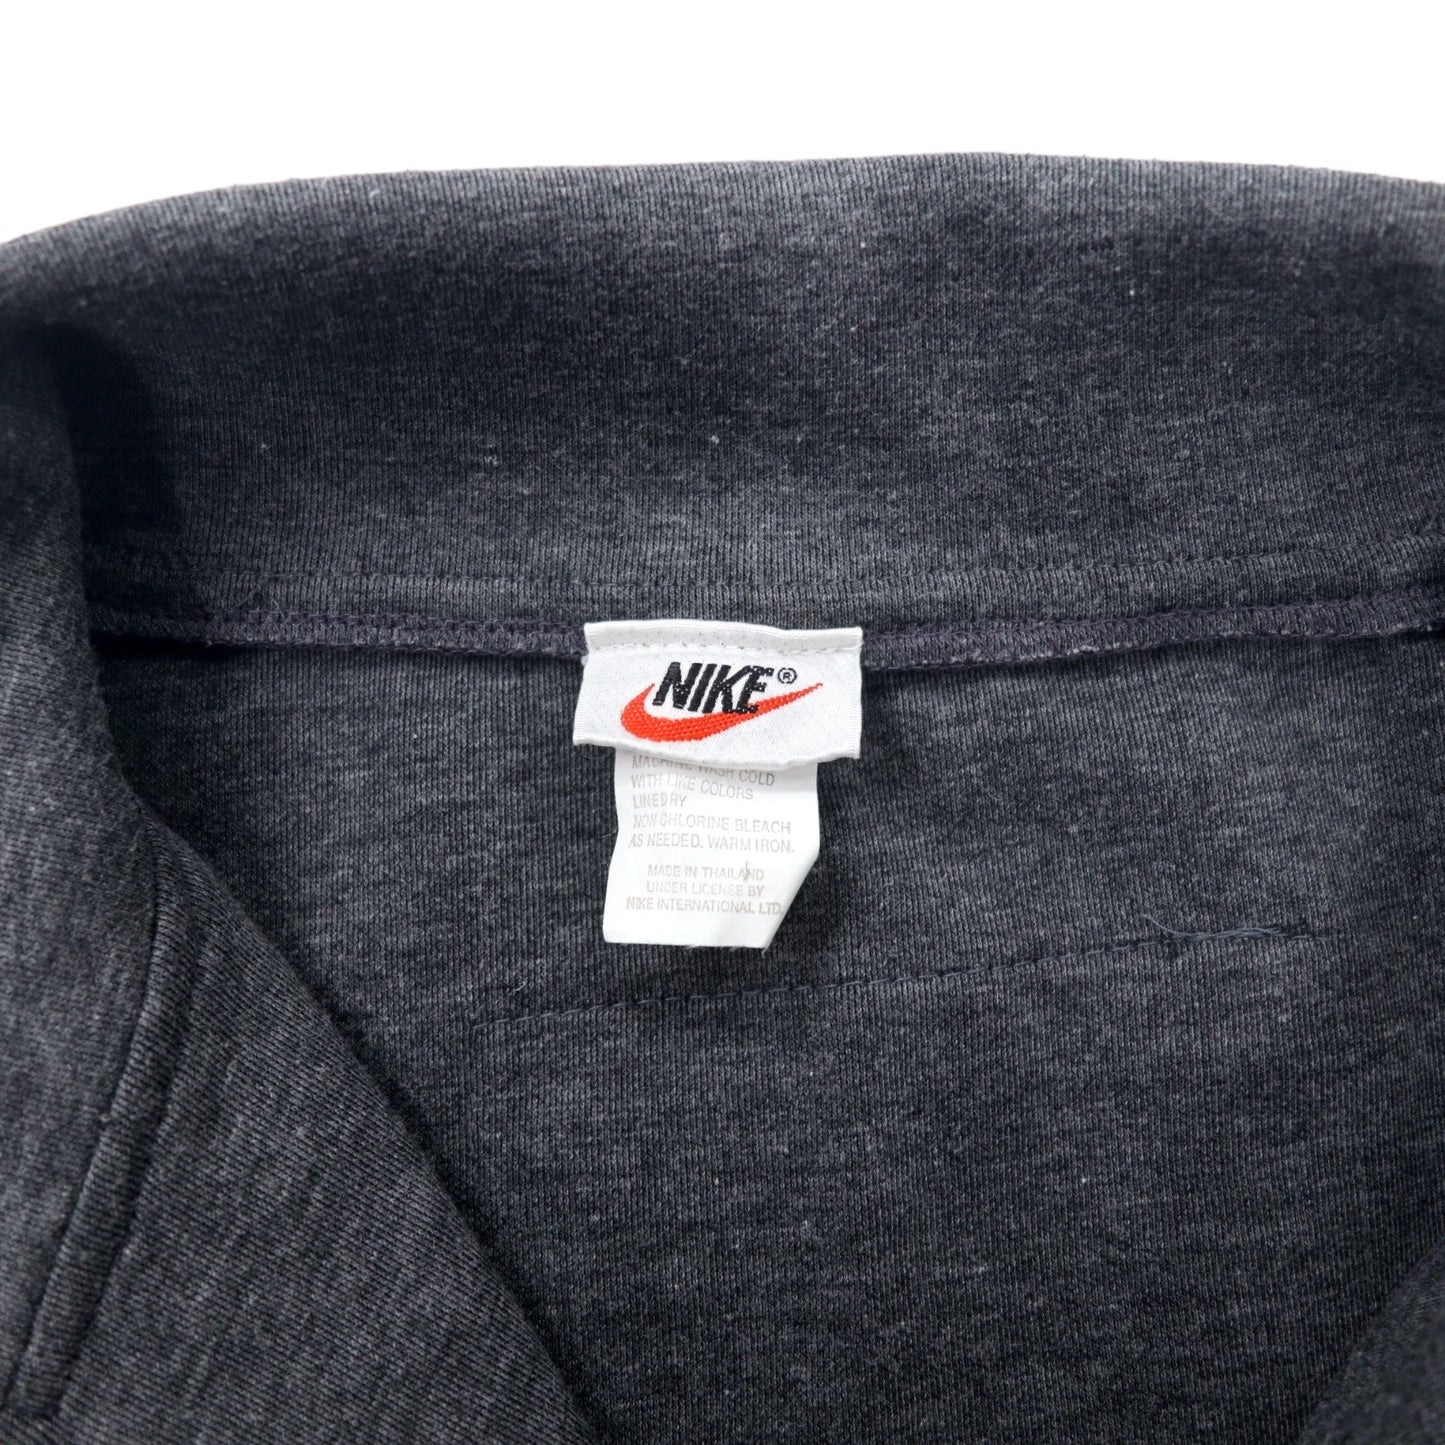 NIKE 90's Half Zip Sweatshirt M Gray Polyester Cotton Silver Tag 